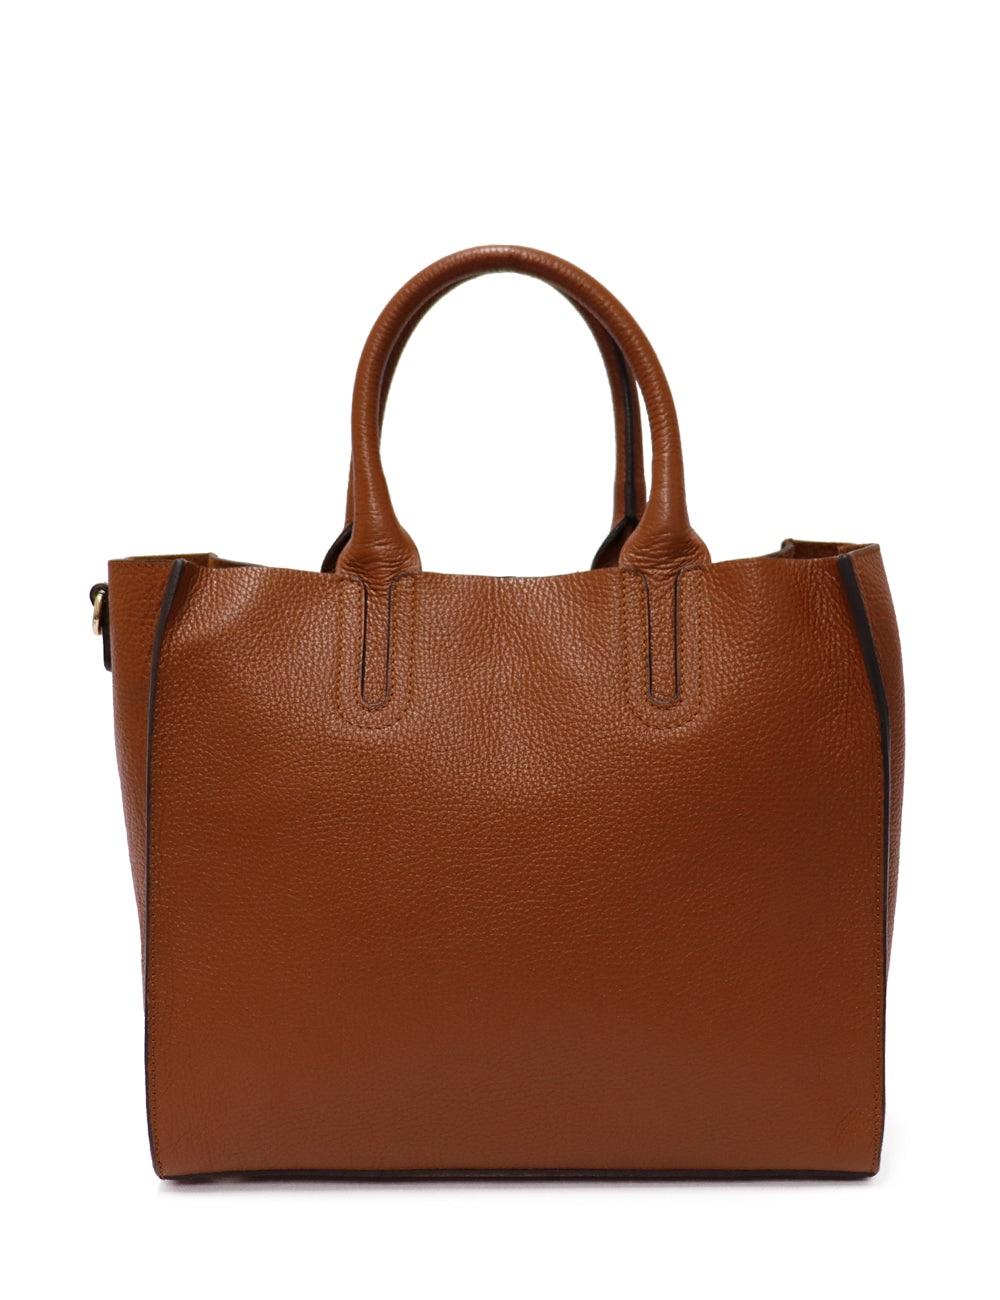 Women's Roberto Cavalli Brown Leather Tote Bag